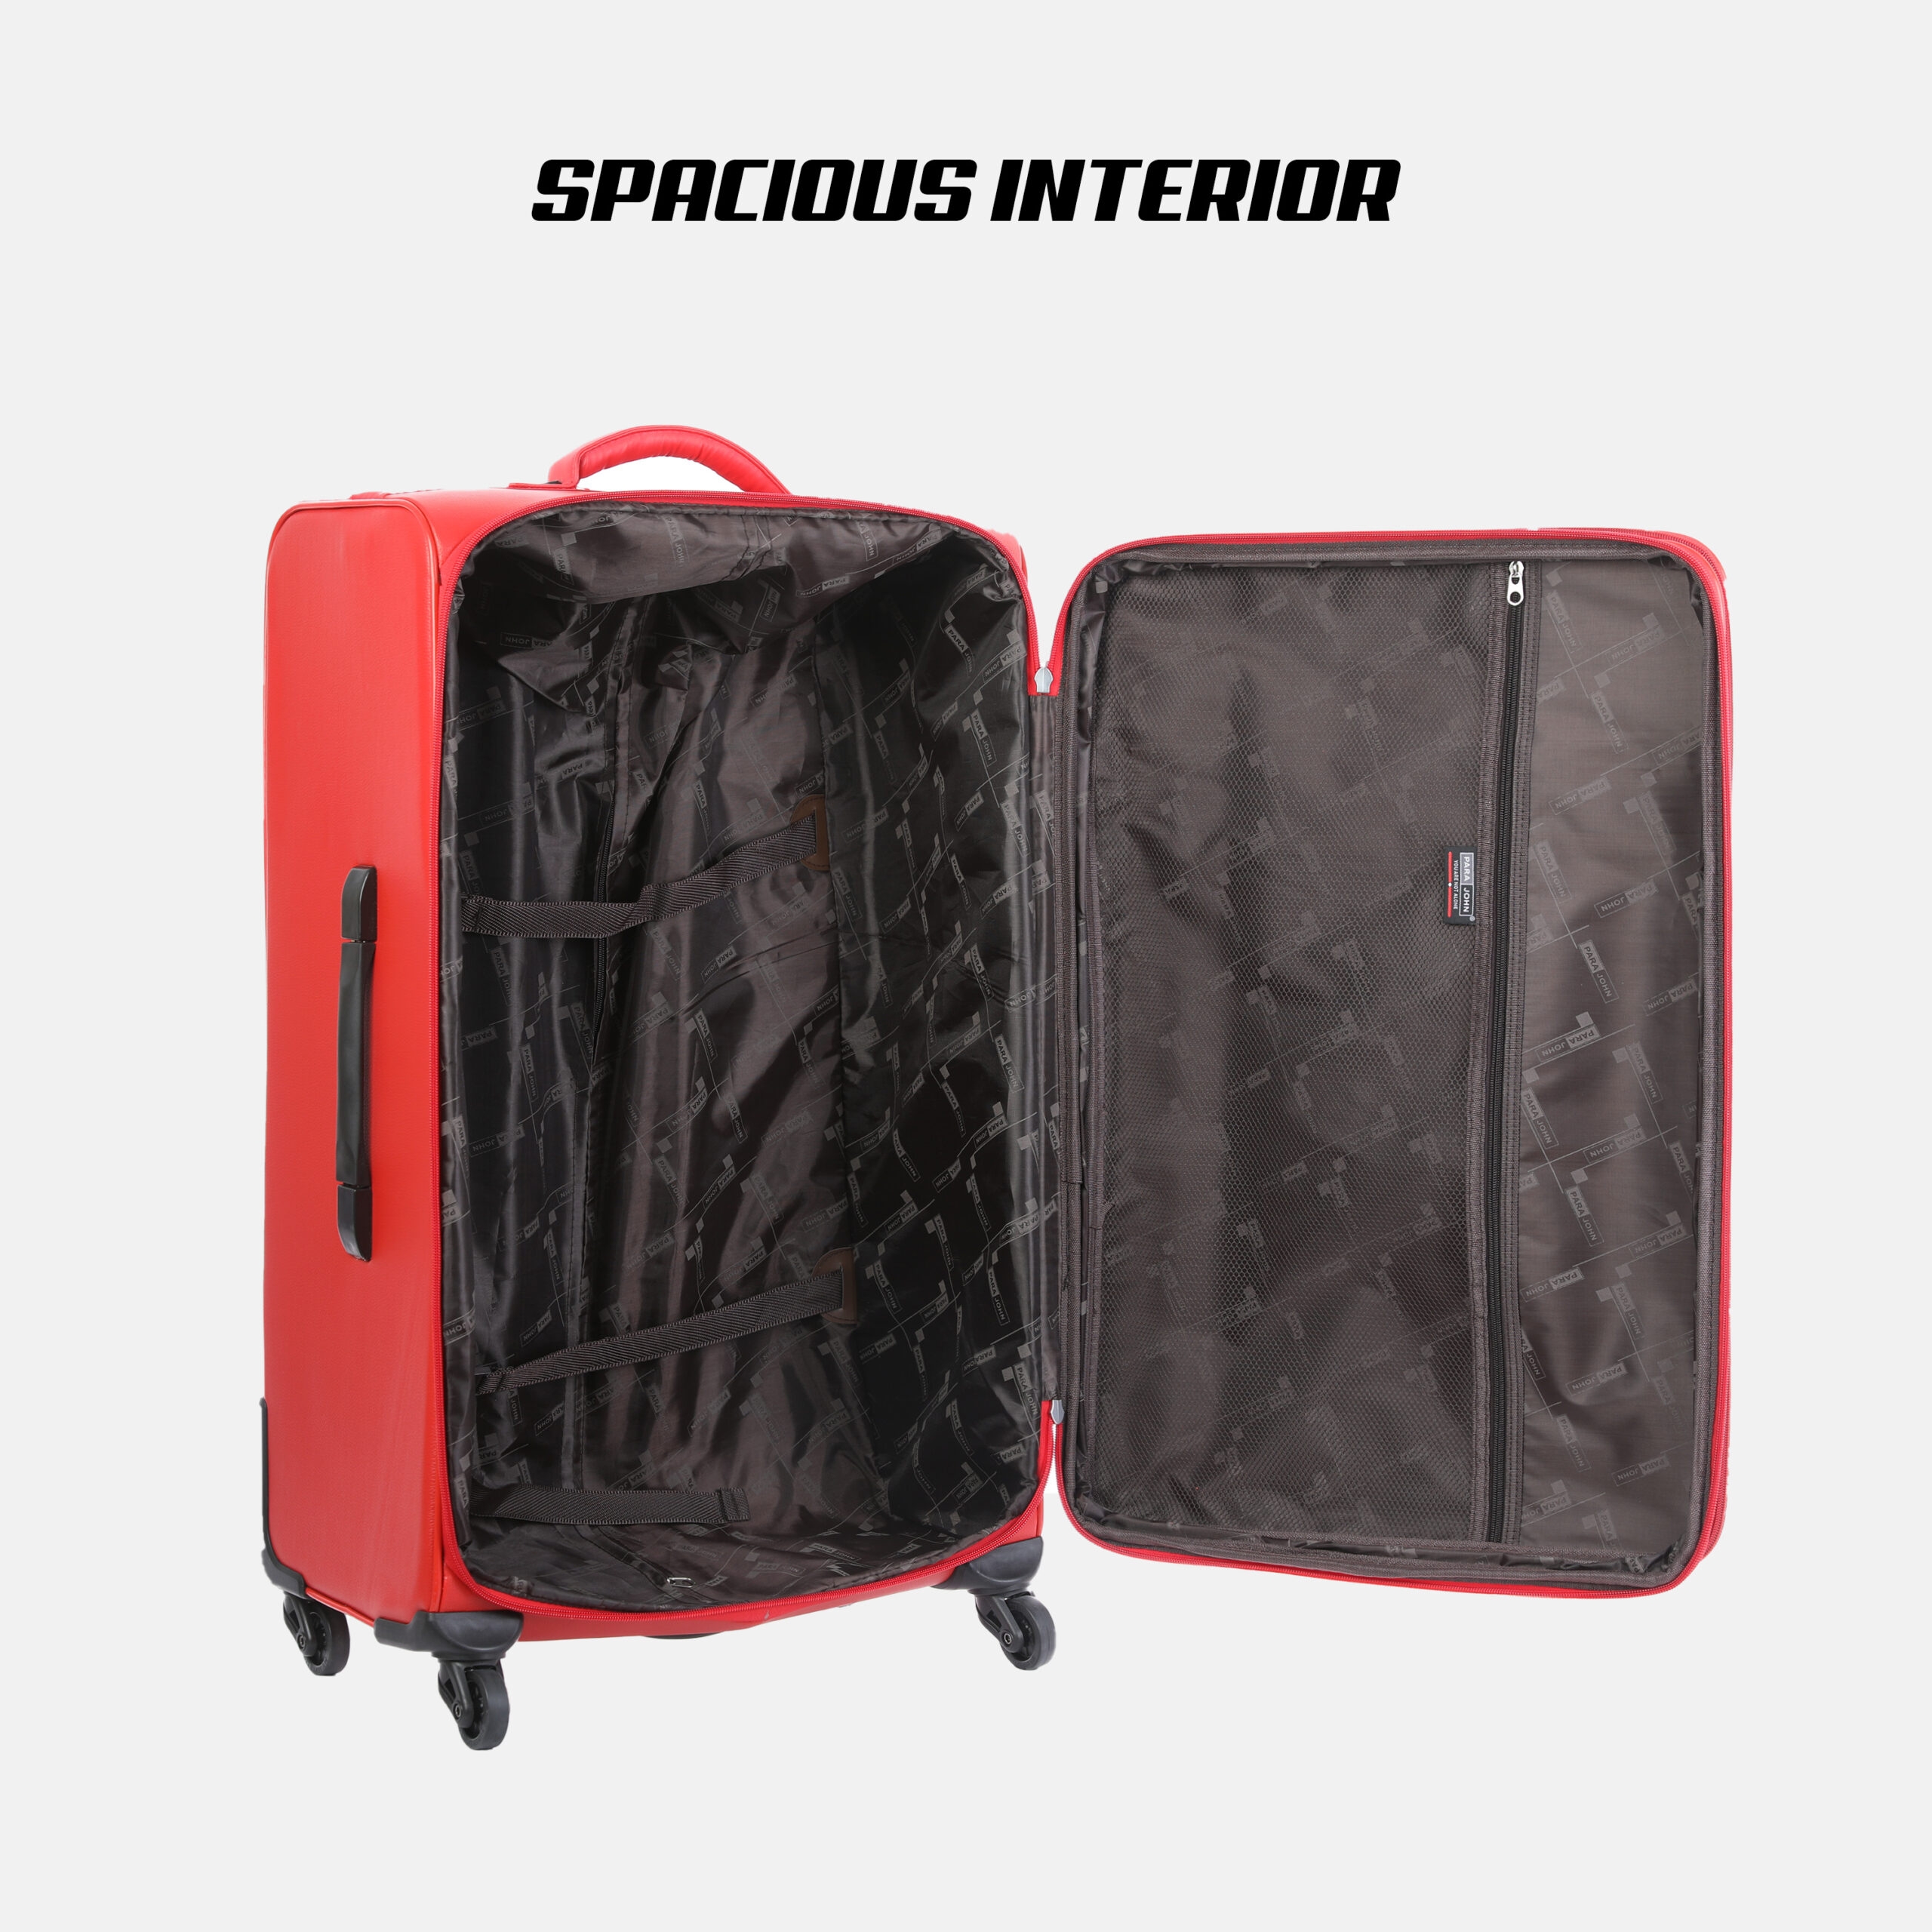 طقم حقائب سفر 4 حقائب (16 ، 20 ، 24 ، 28) بوصة جلد PVC أحمر PARA JOHN - 4 Pcs Travel Luggage Suitcase Trolley Set - (16 ، 20 ، 24 ، 28) inch